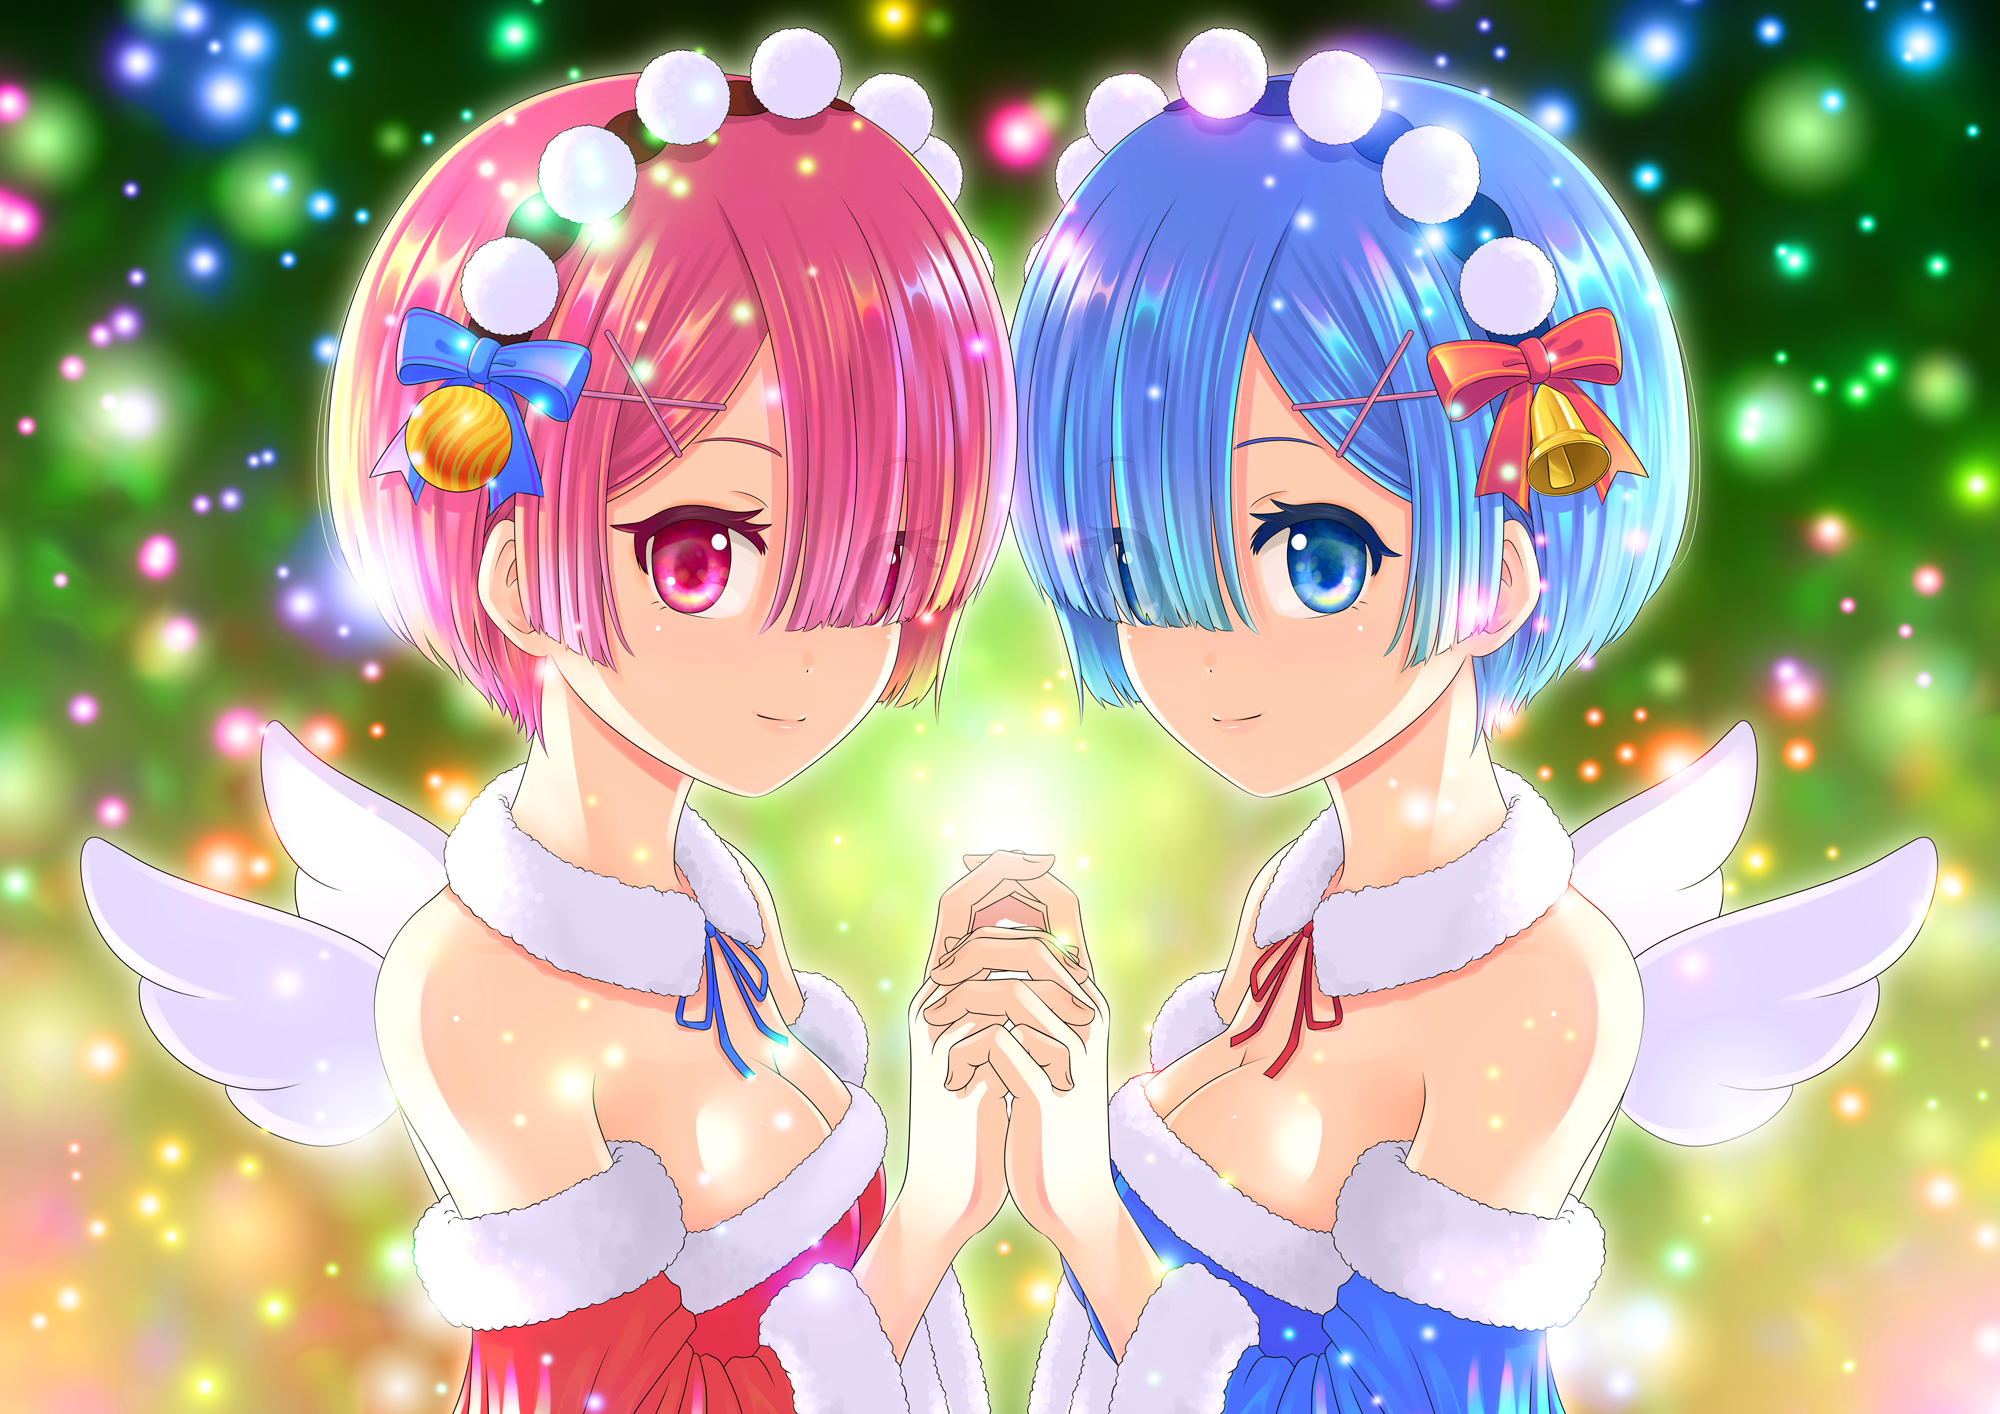 Anime 2000x1414 anime anime girls Re:Zero Kara Hajimeru Isekai Seikatsu Rem (Re:Zero) Ram (Re: Zero) short hair blue hair pink hair twins two women artwork digital art fan art